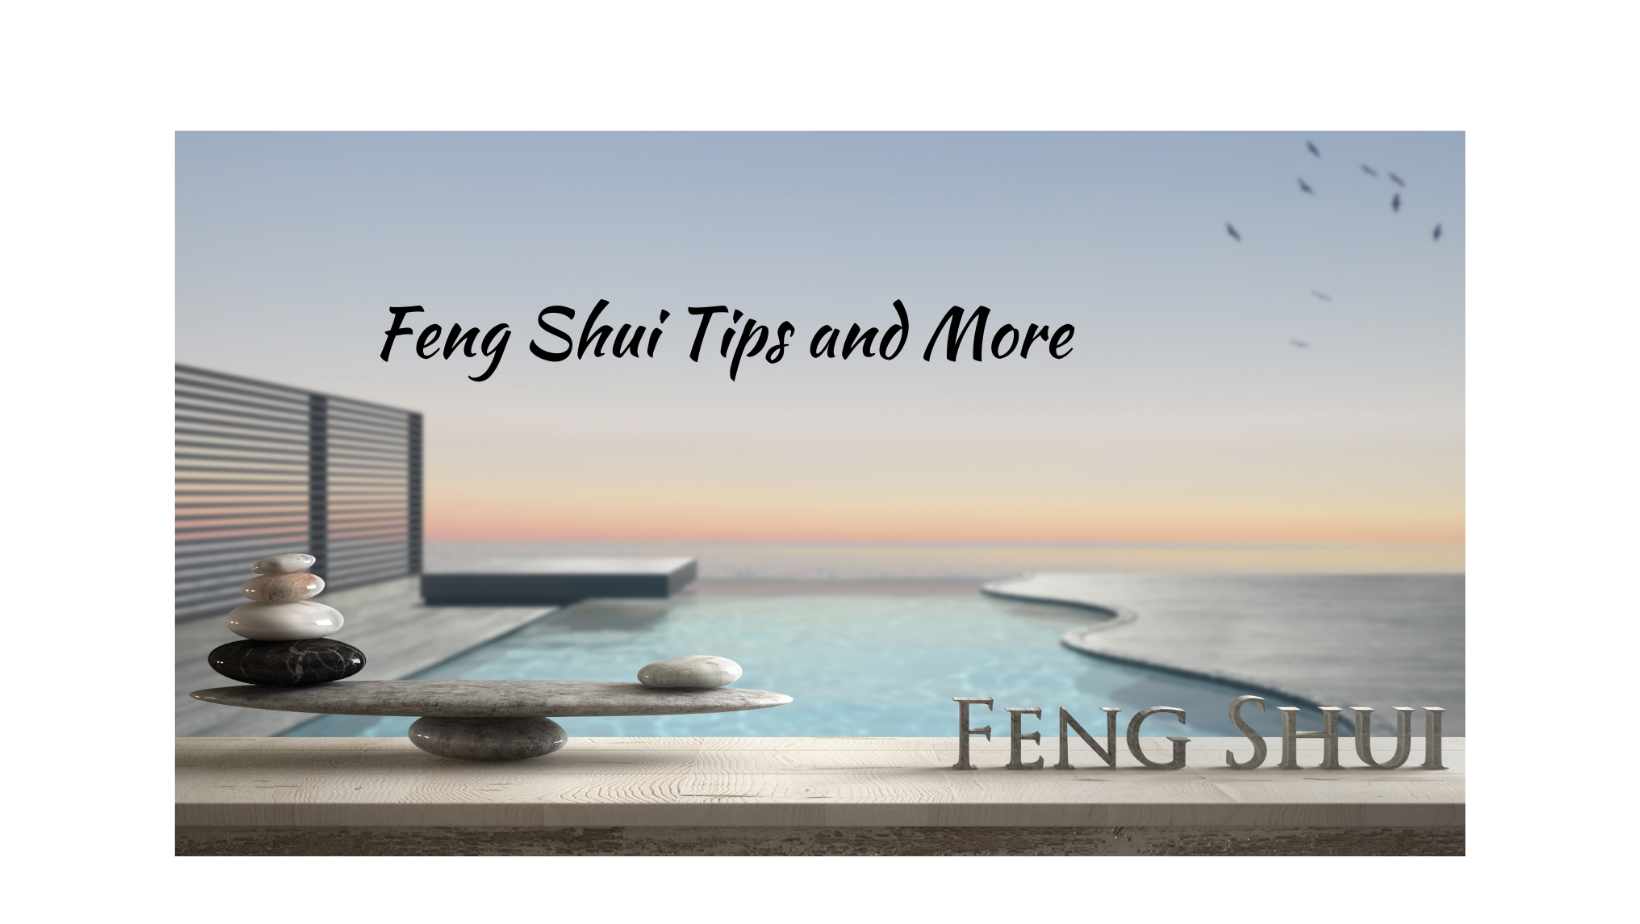 Feng shui tips for relationship